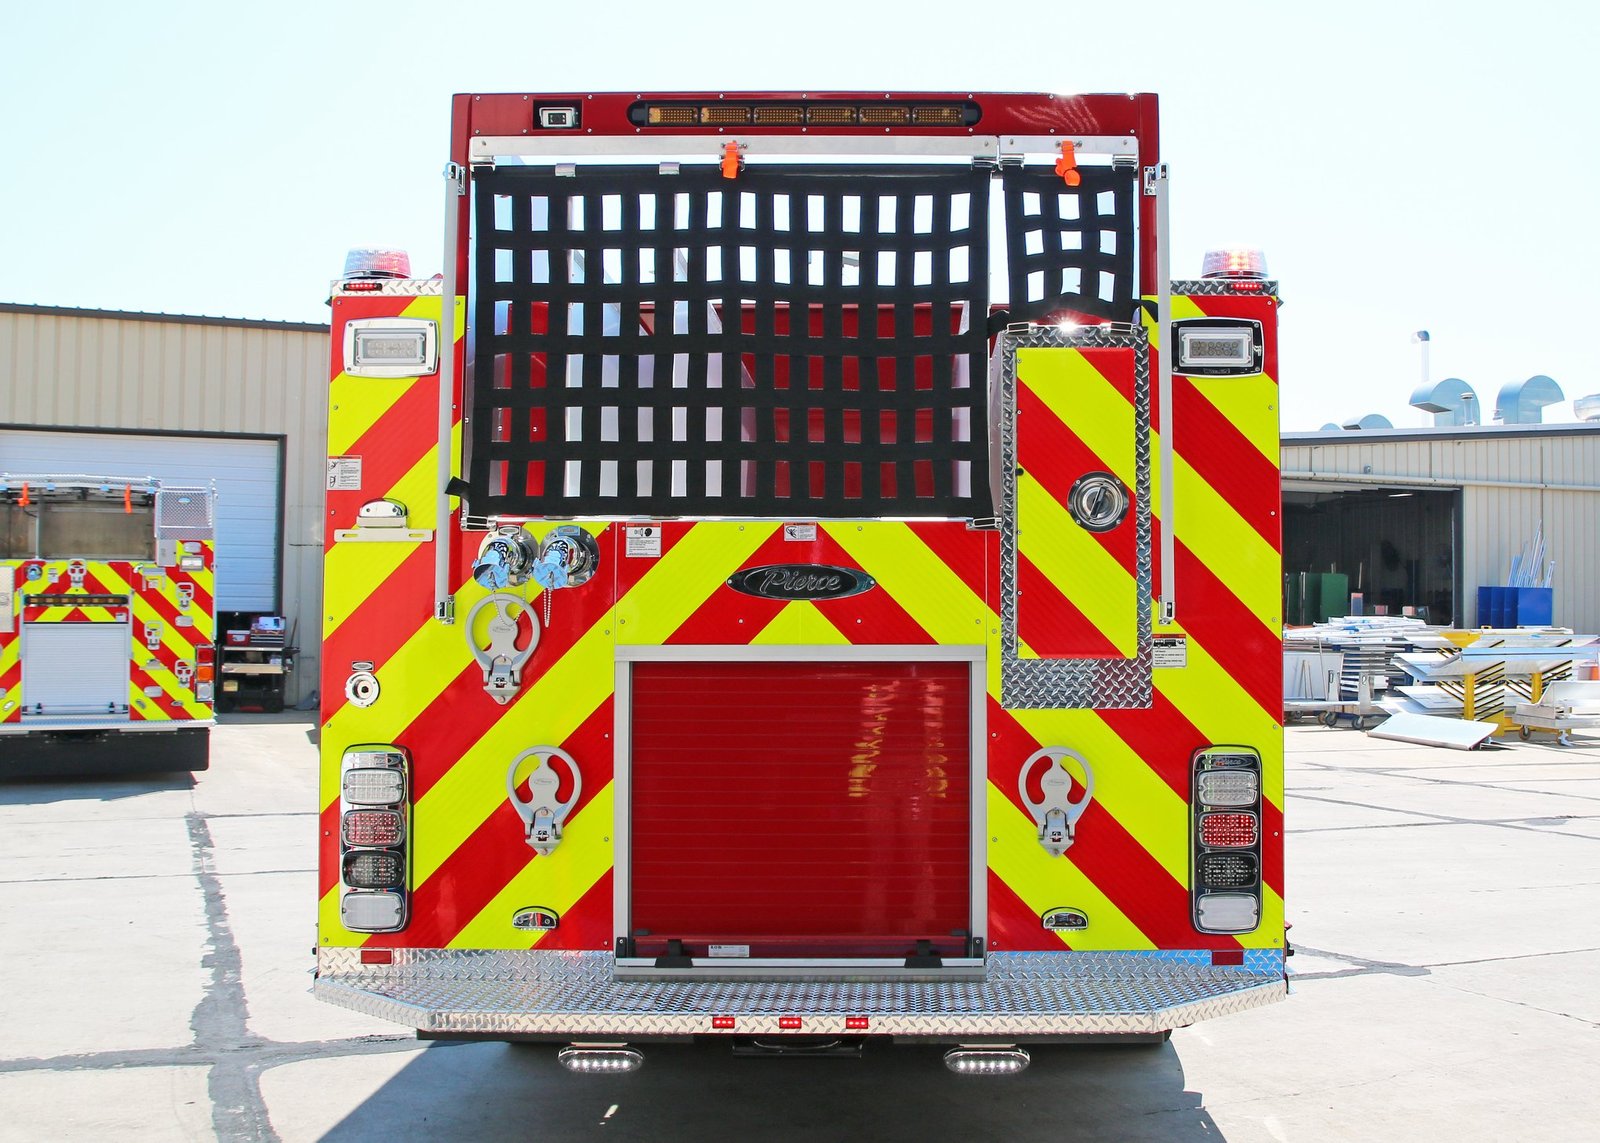 Warrenville Fire Protection District - Pumper